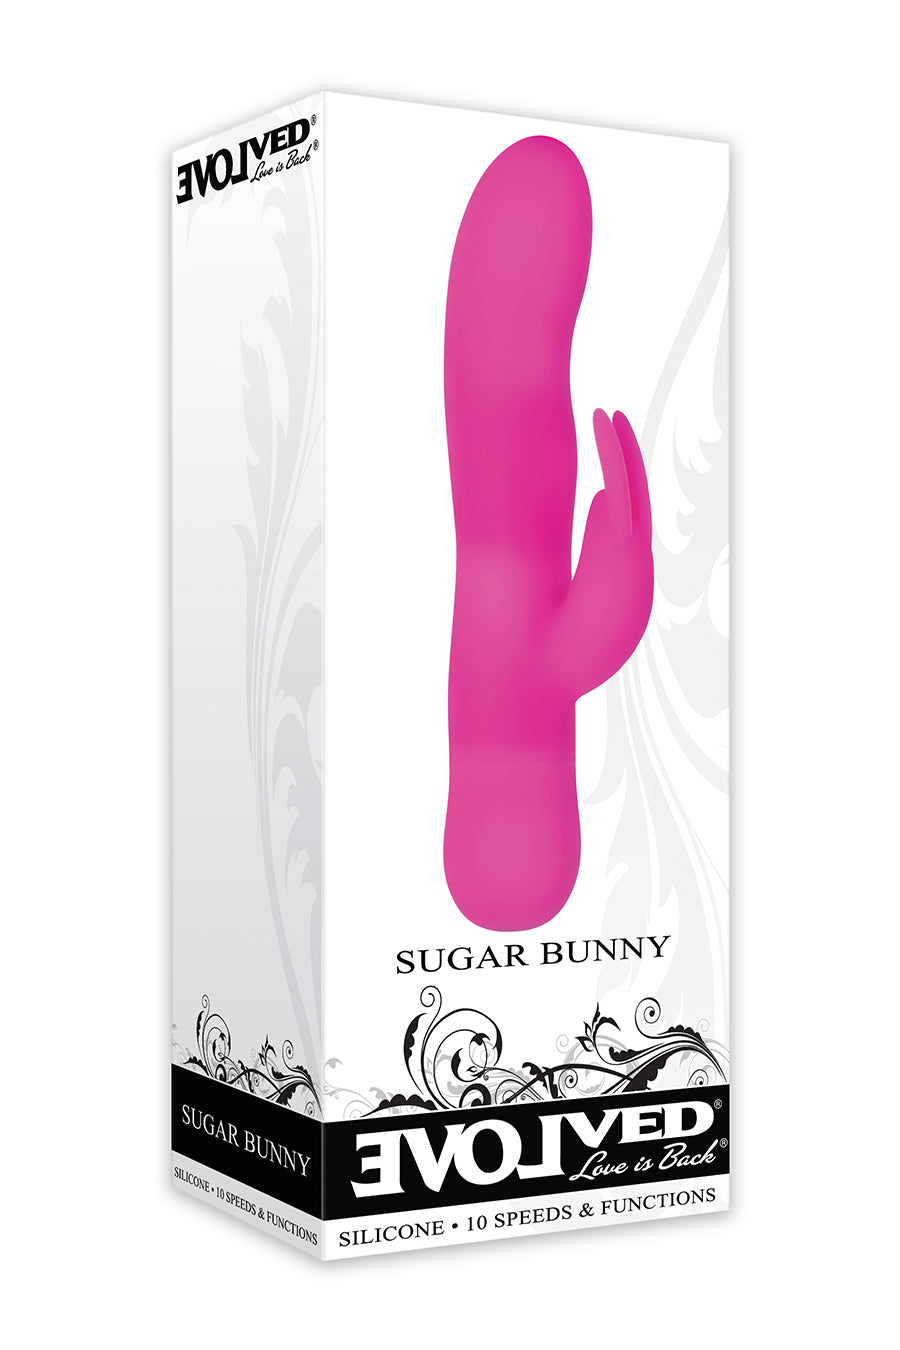 Evolved Sugar Bunny